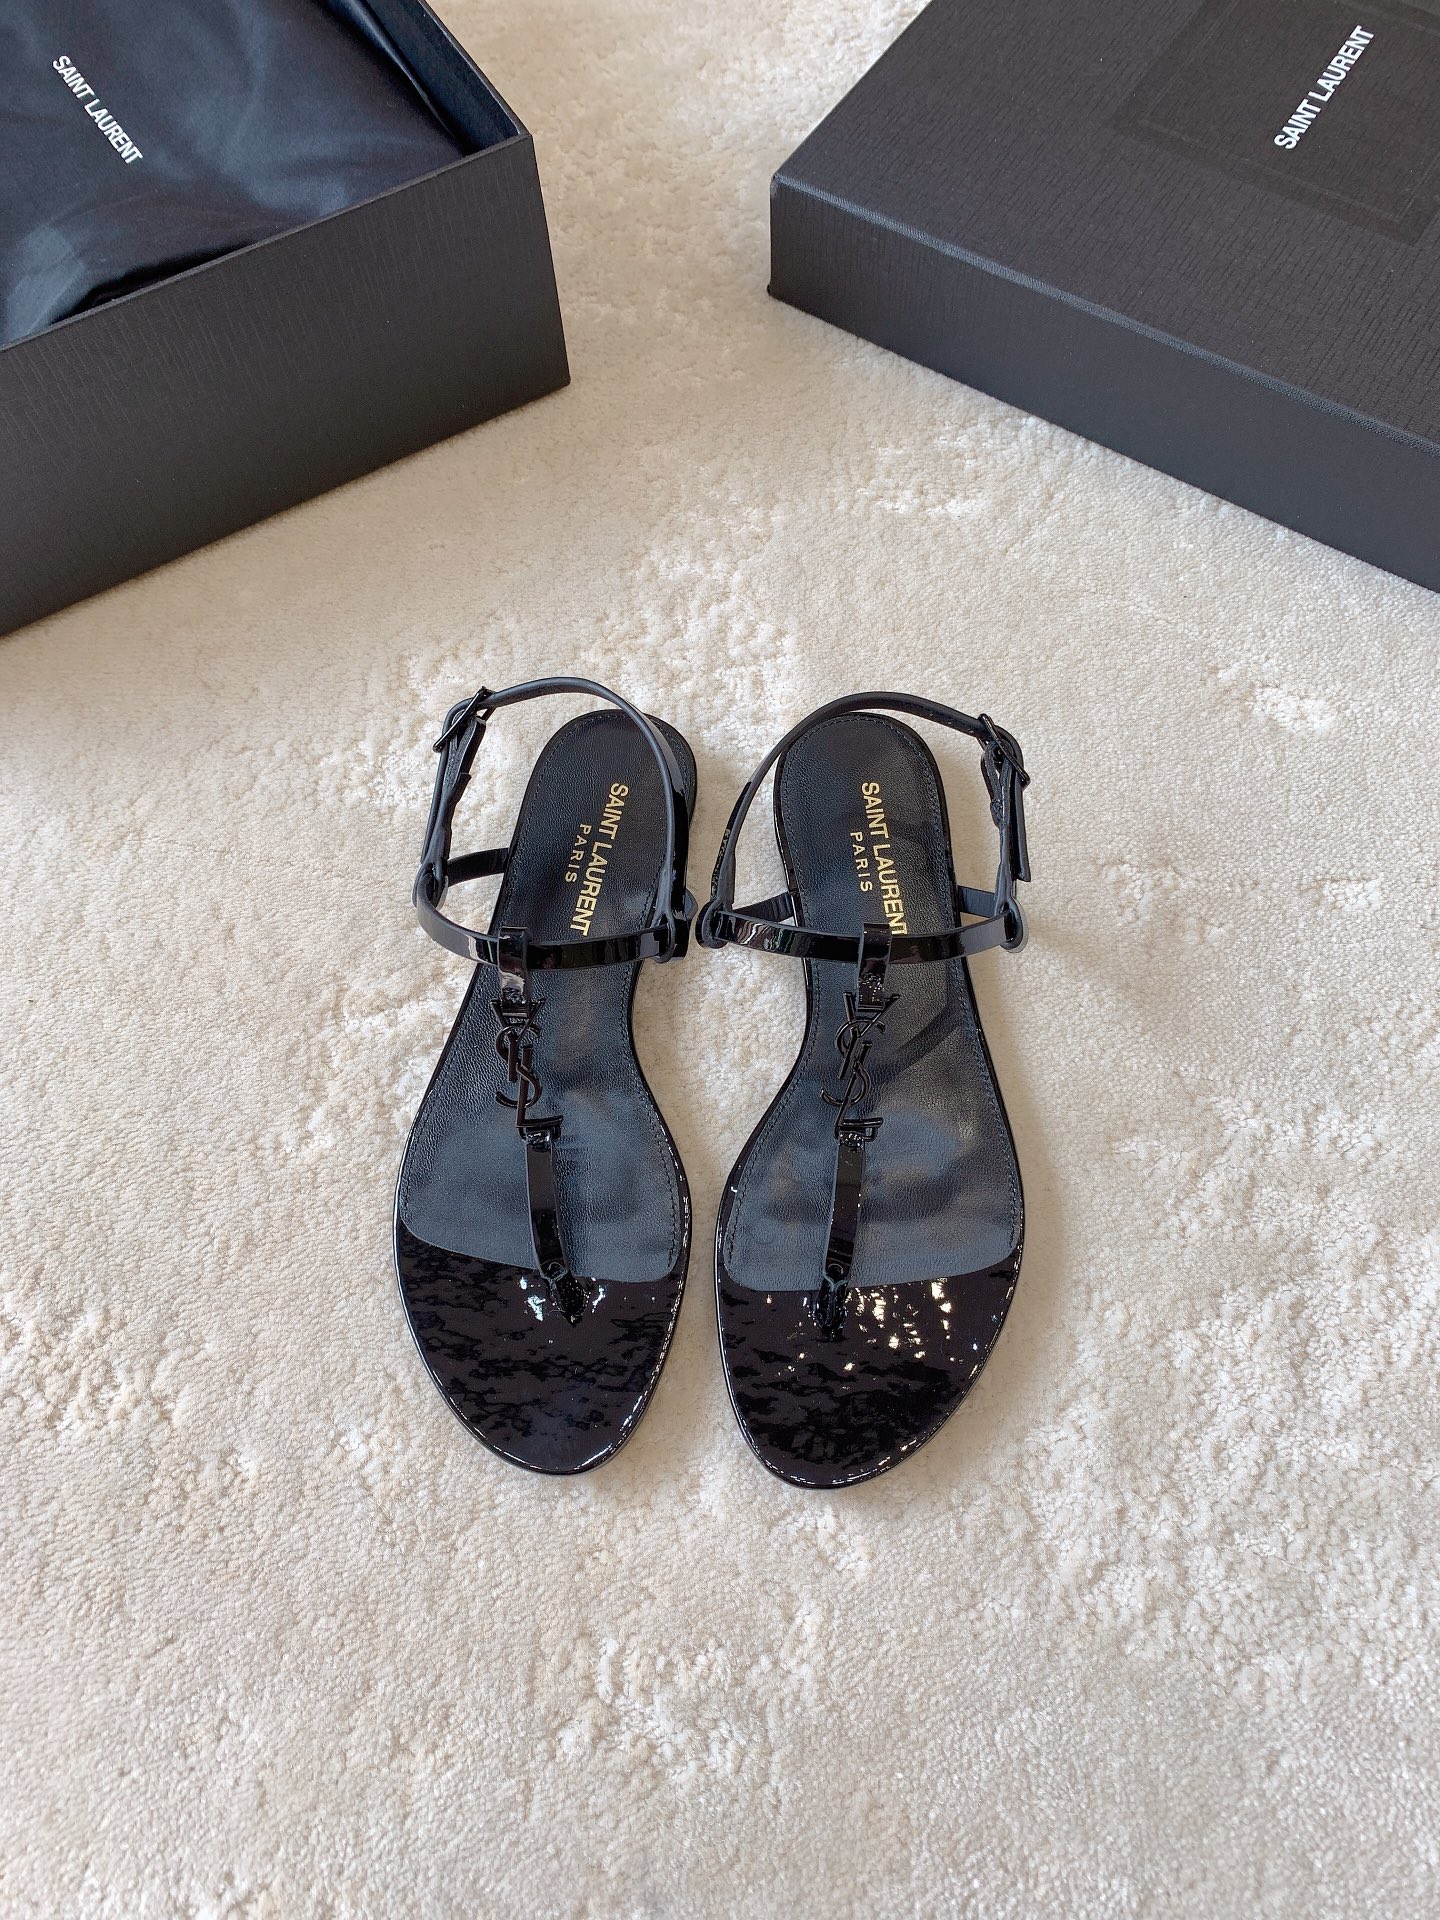 Yves Saint Laurent Zapatos Sandalias Negro Dermis Laca Piel de oveja